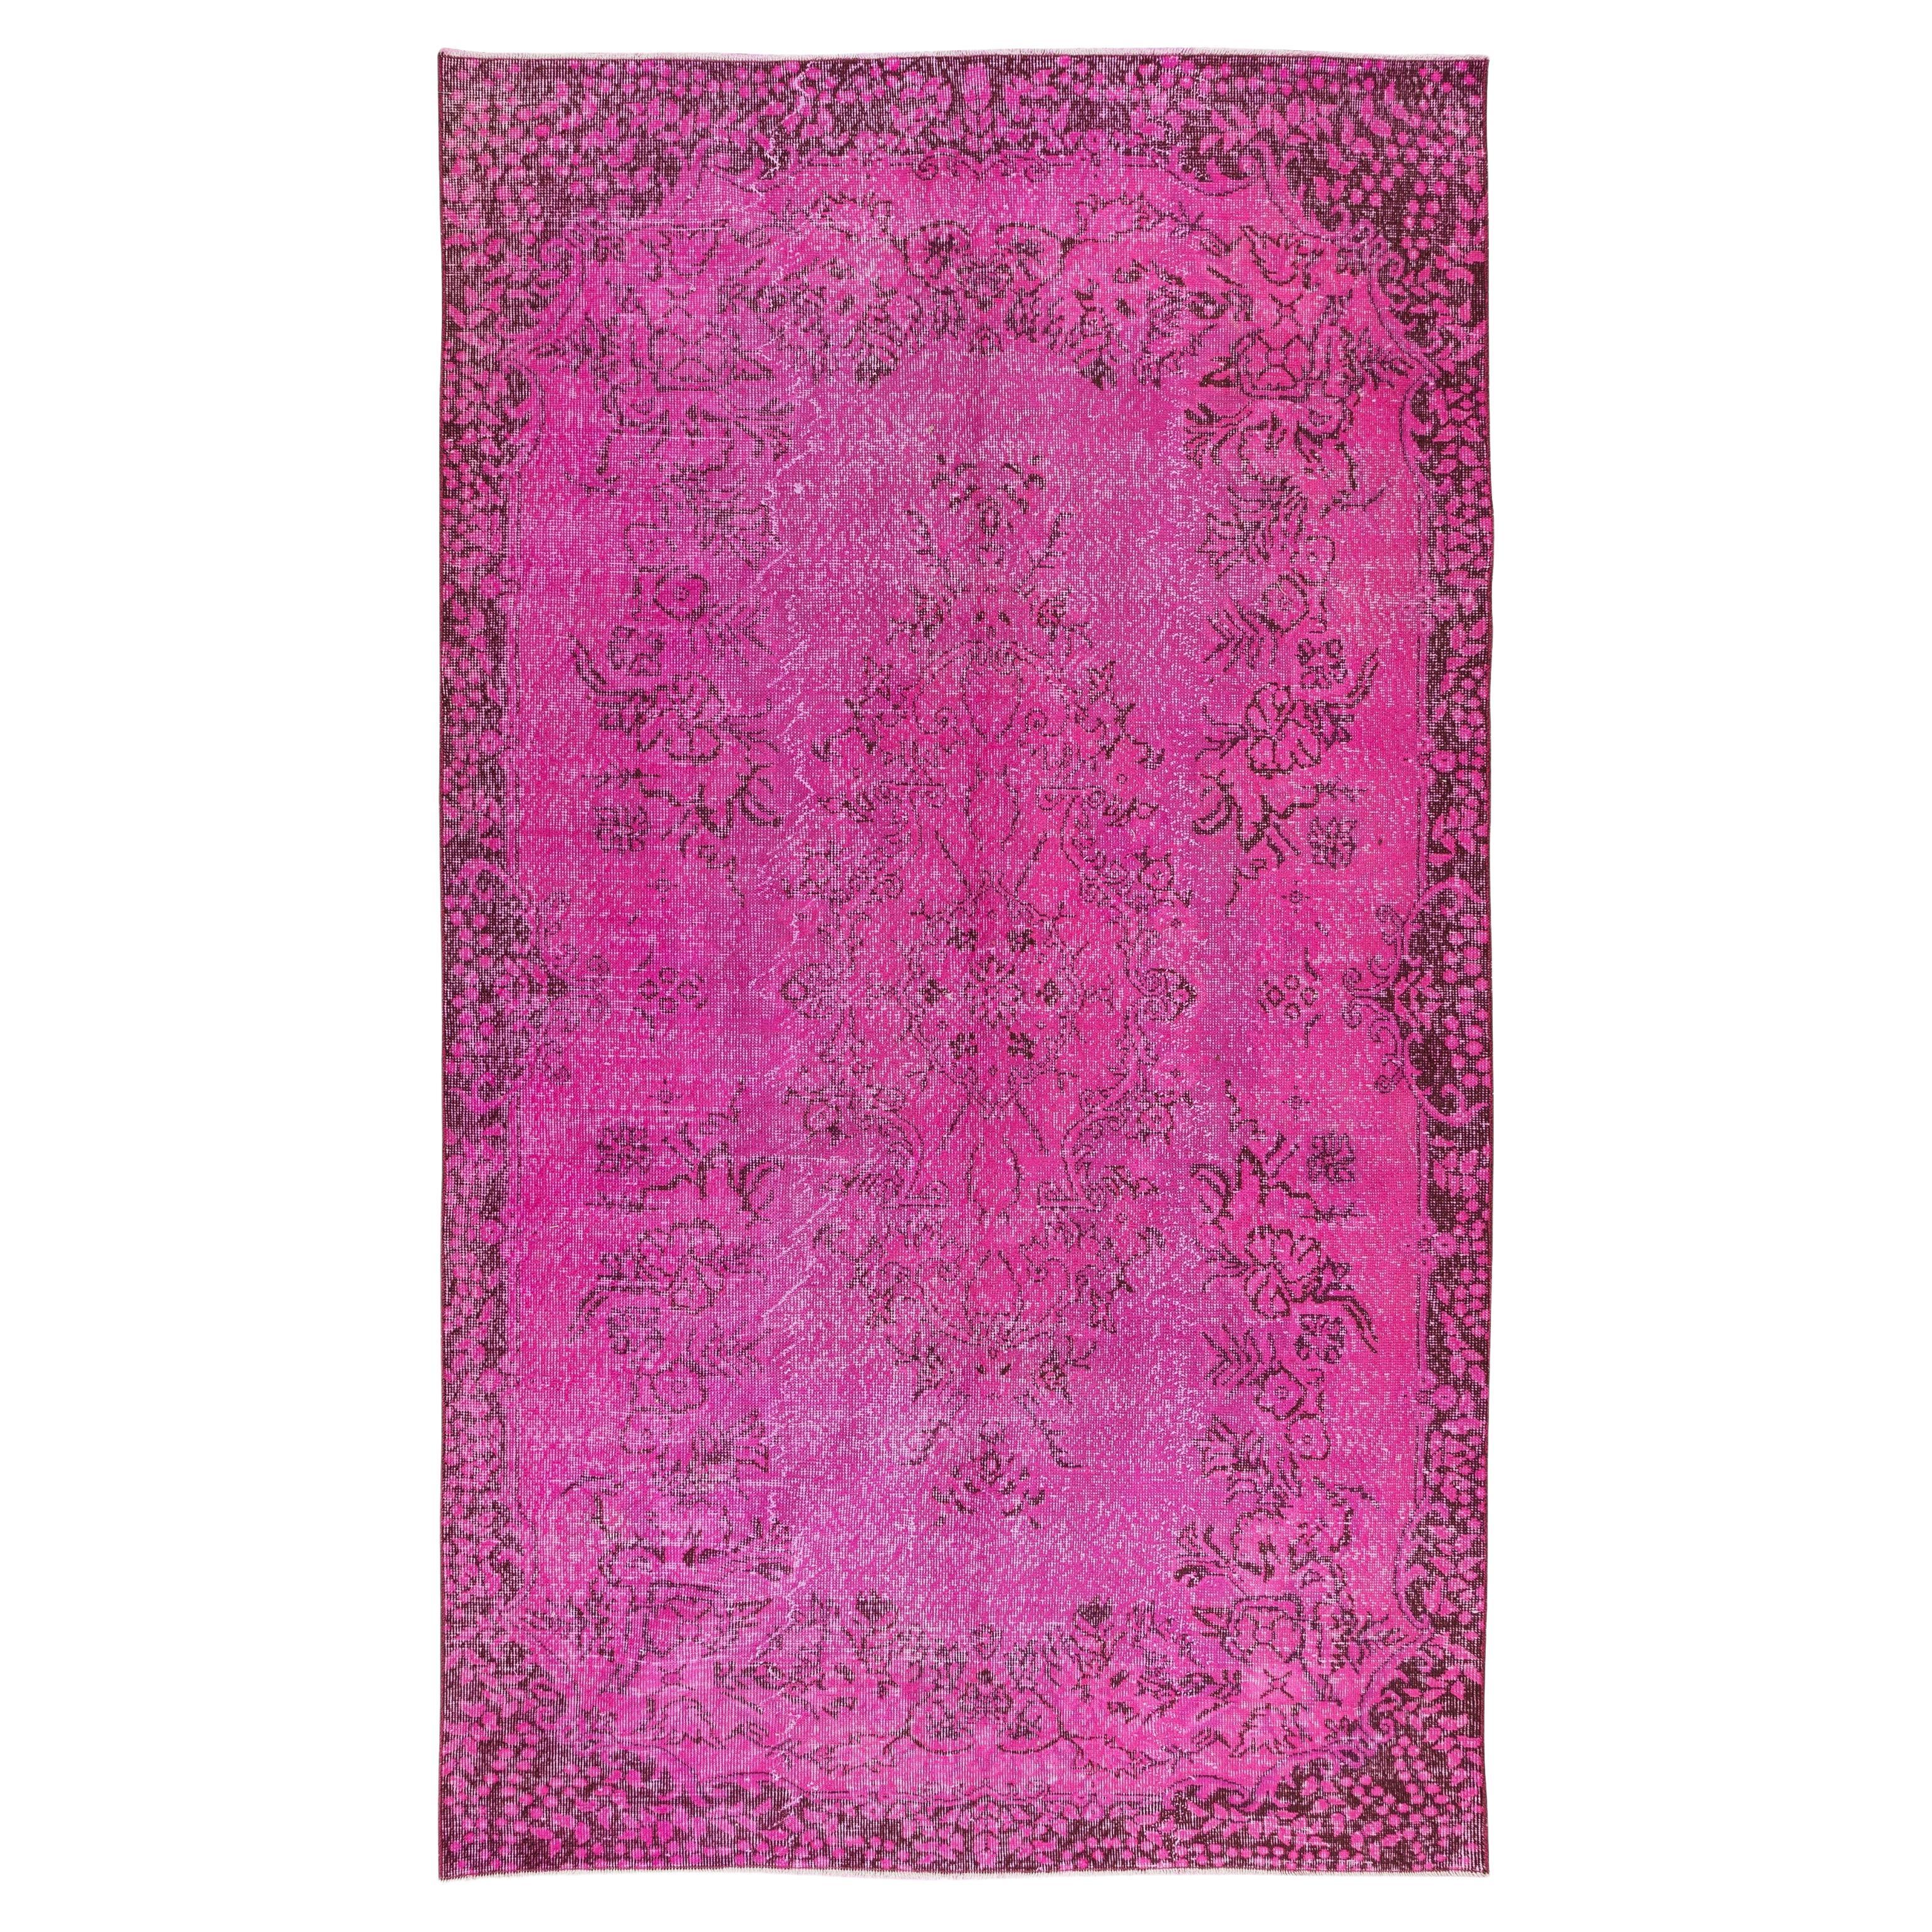 5.6x9.8 Ft Vintage Handmade Turkish Area Rug in Pink with Medallion Design For Sale